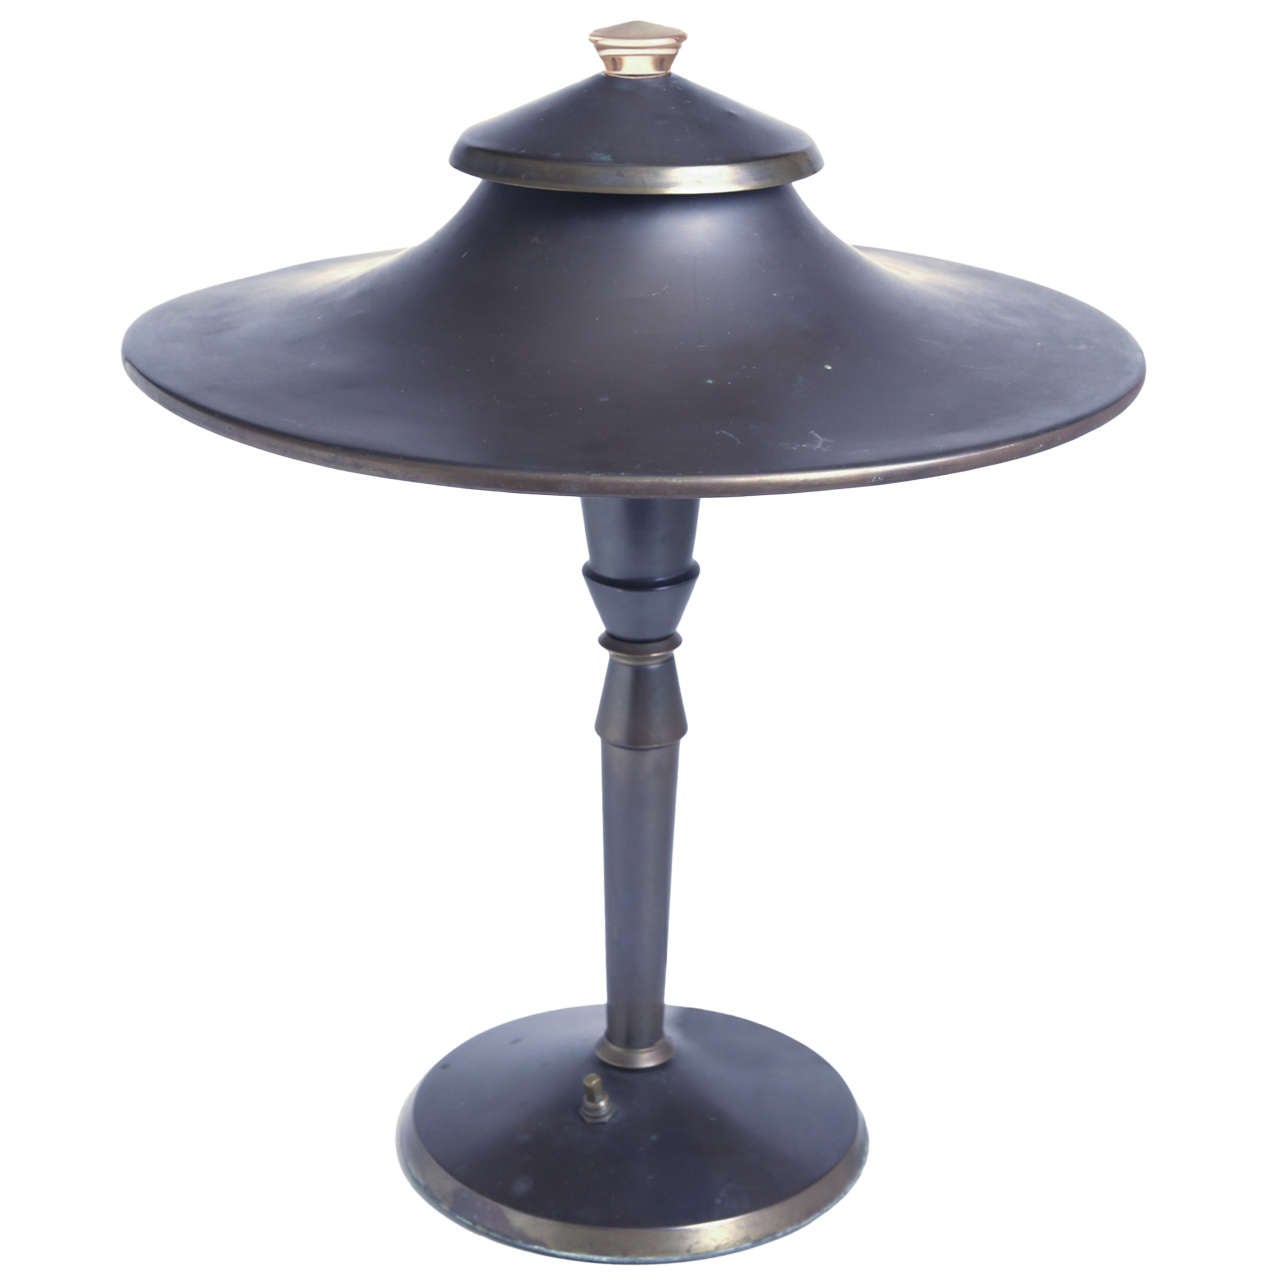 Original Early Leroy Doane Art Deco or Machine Age Pagoda Table Lamp For Sale